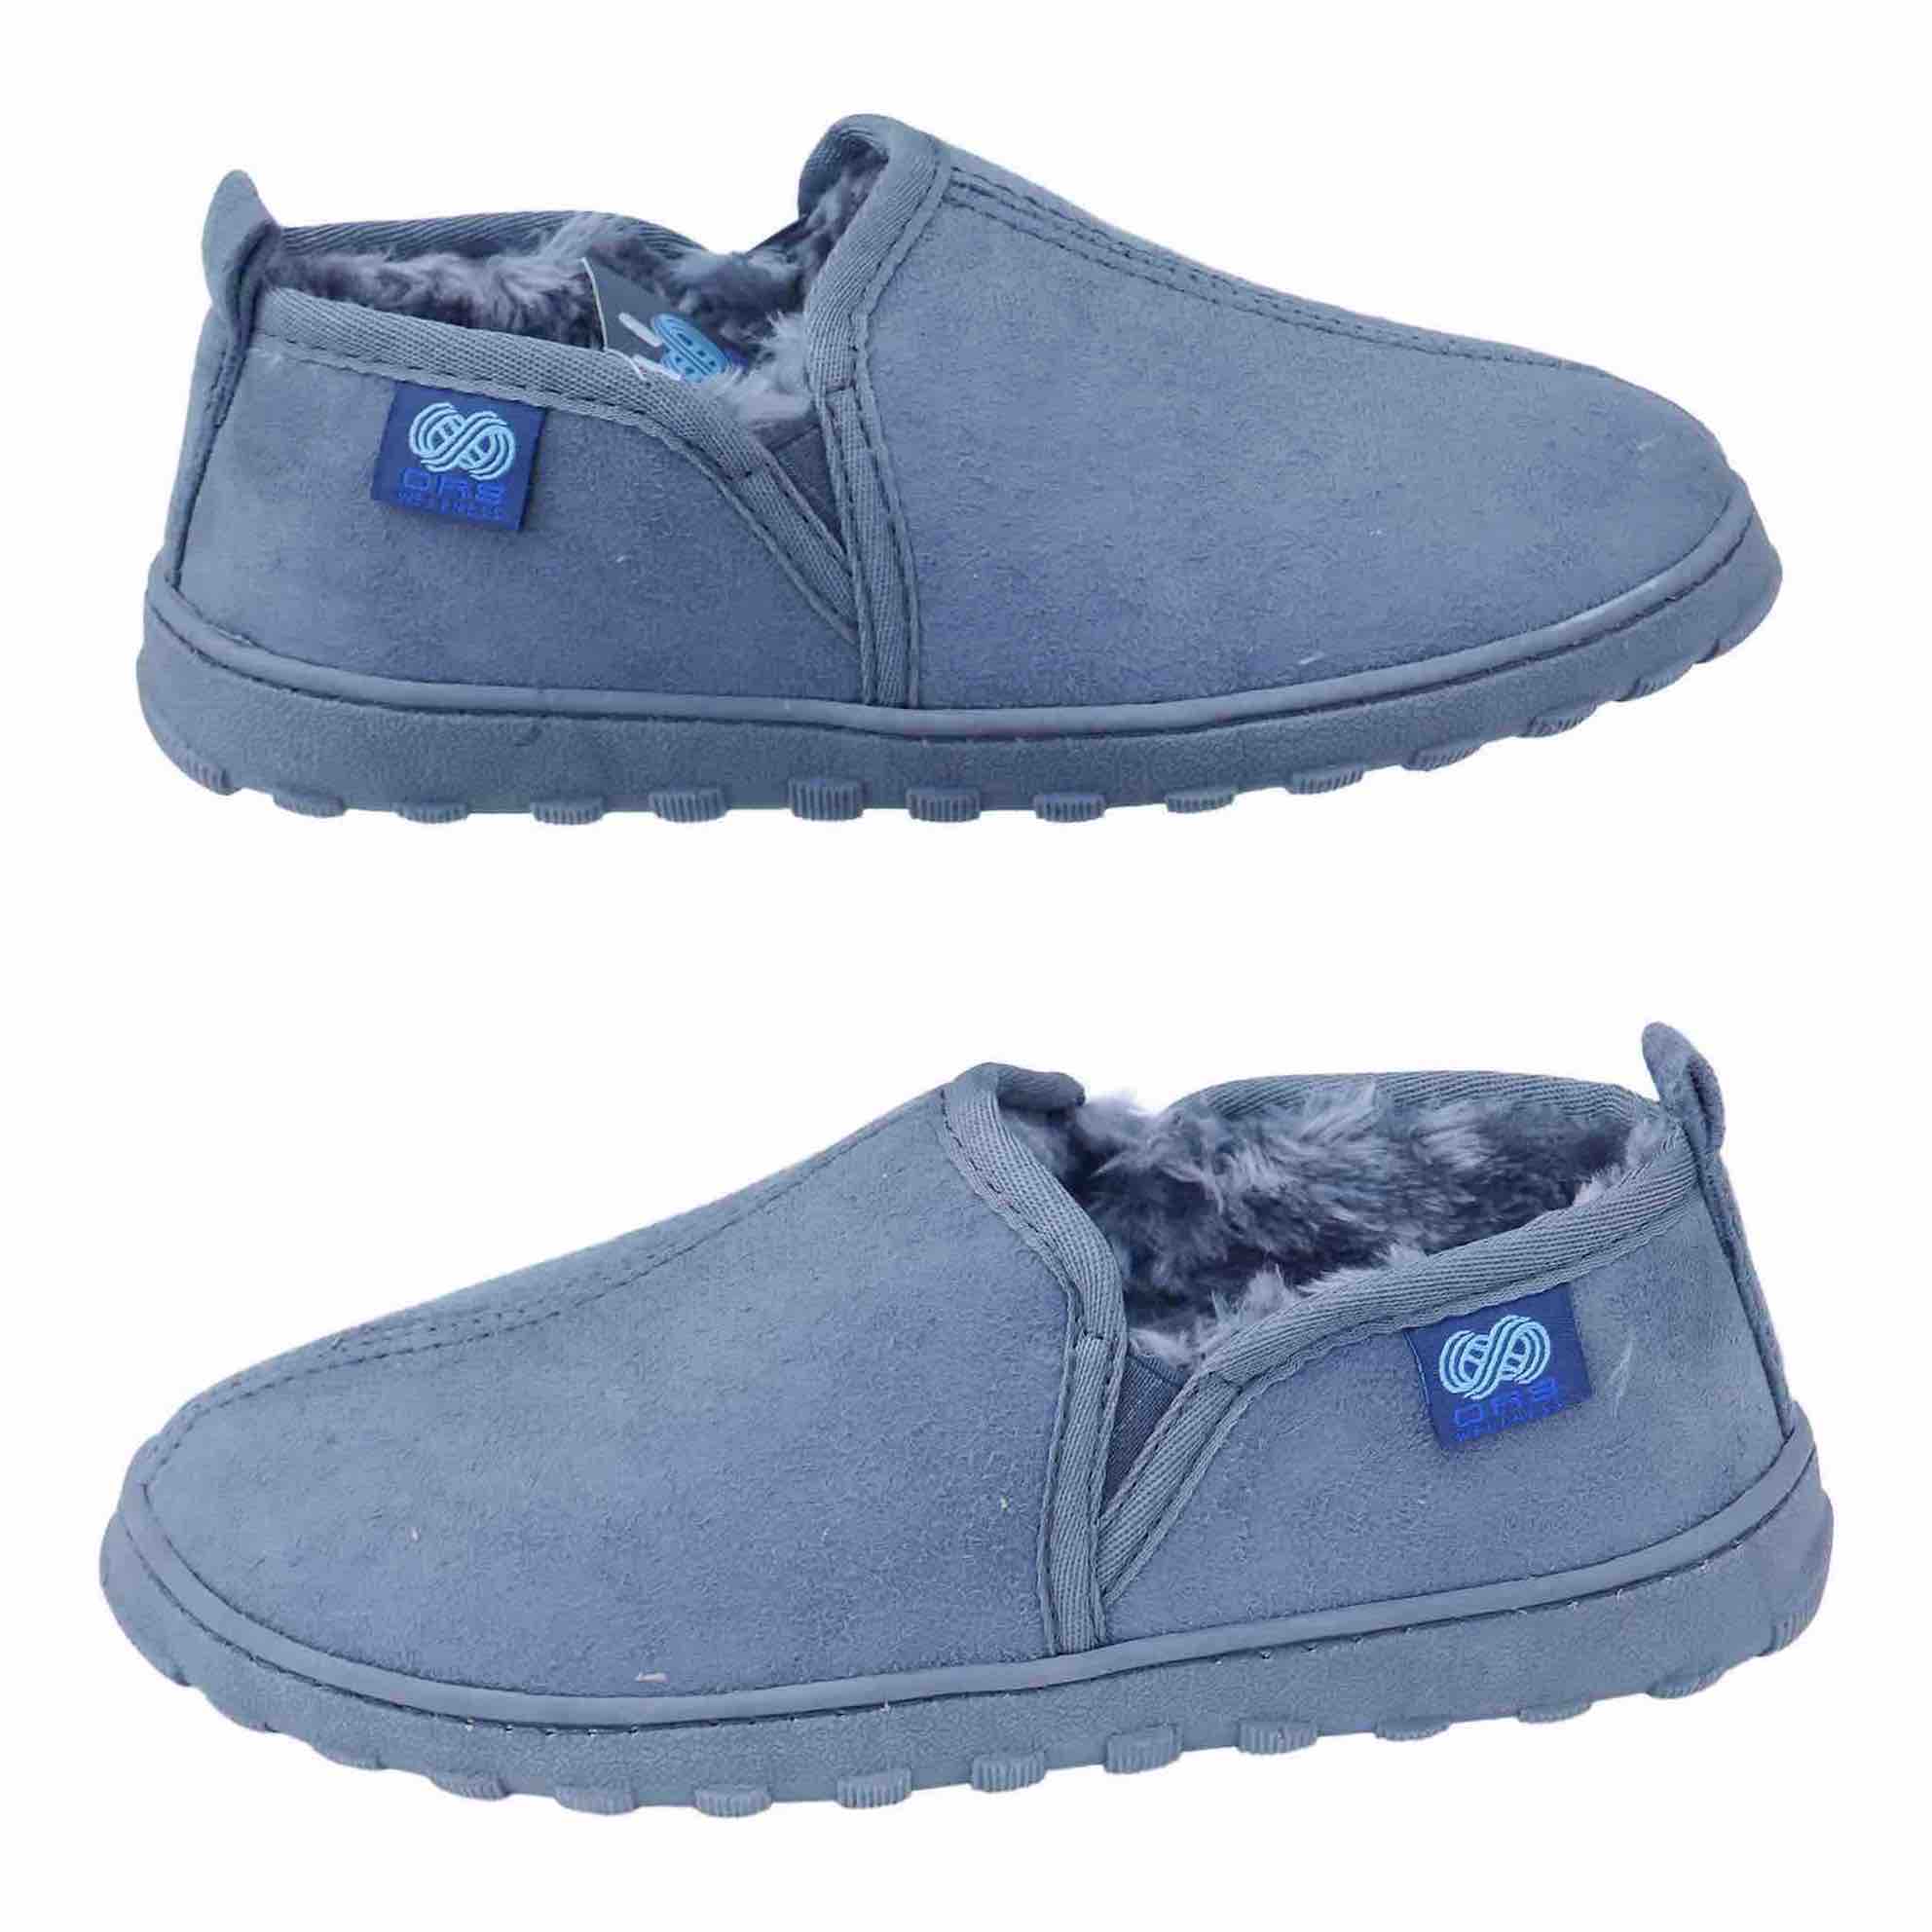 orthopaedic slippers for womens uk